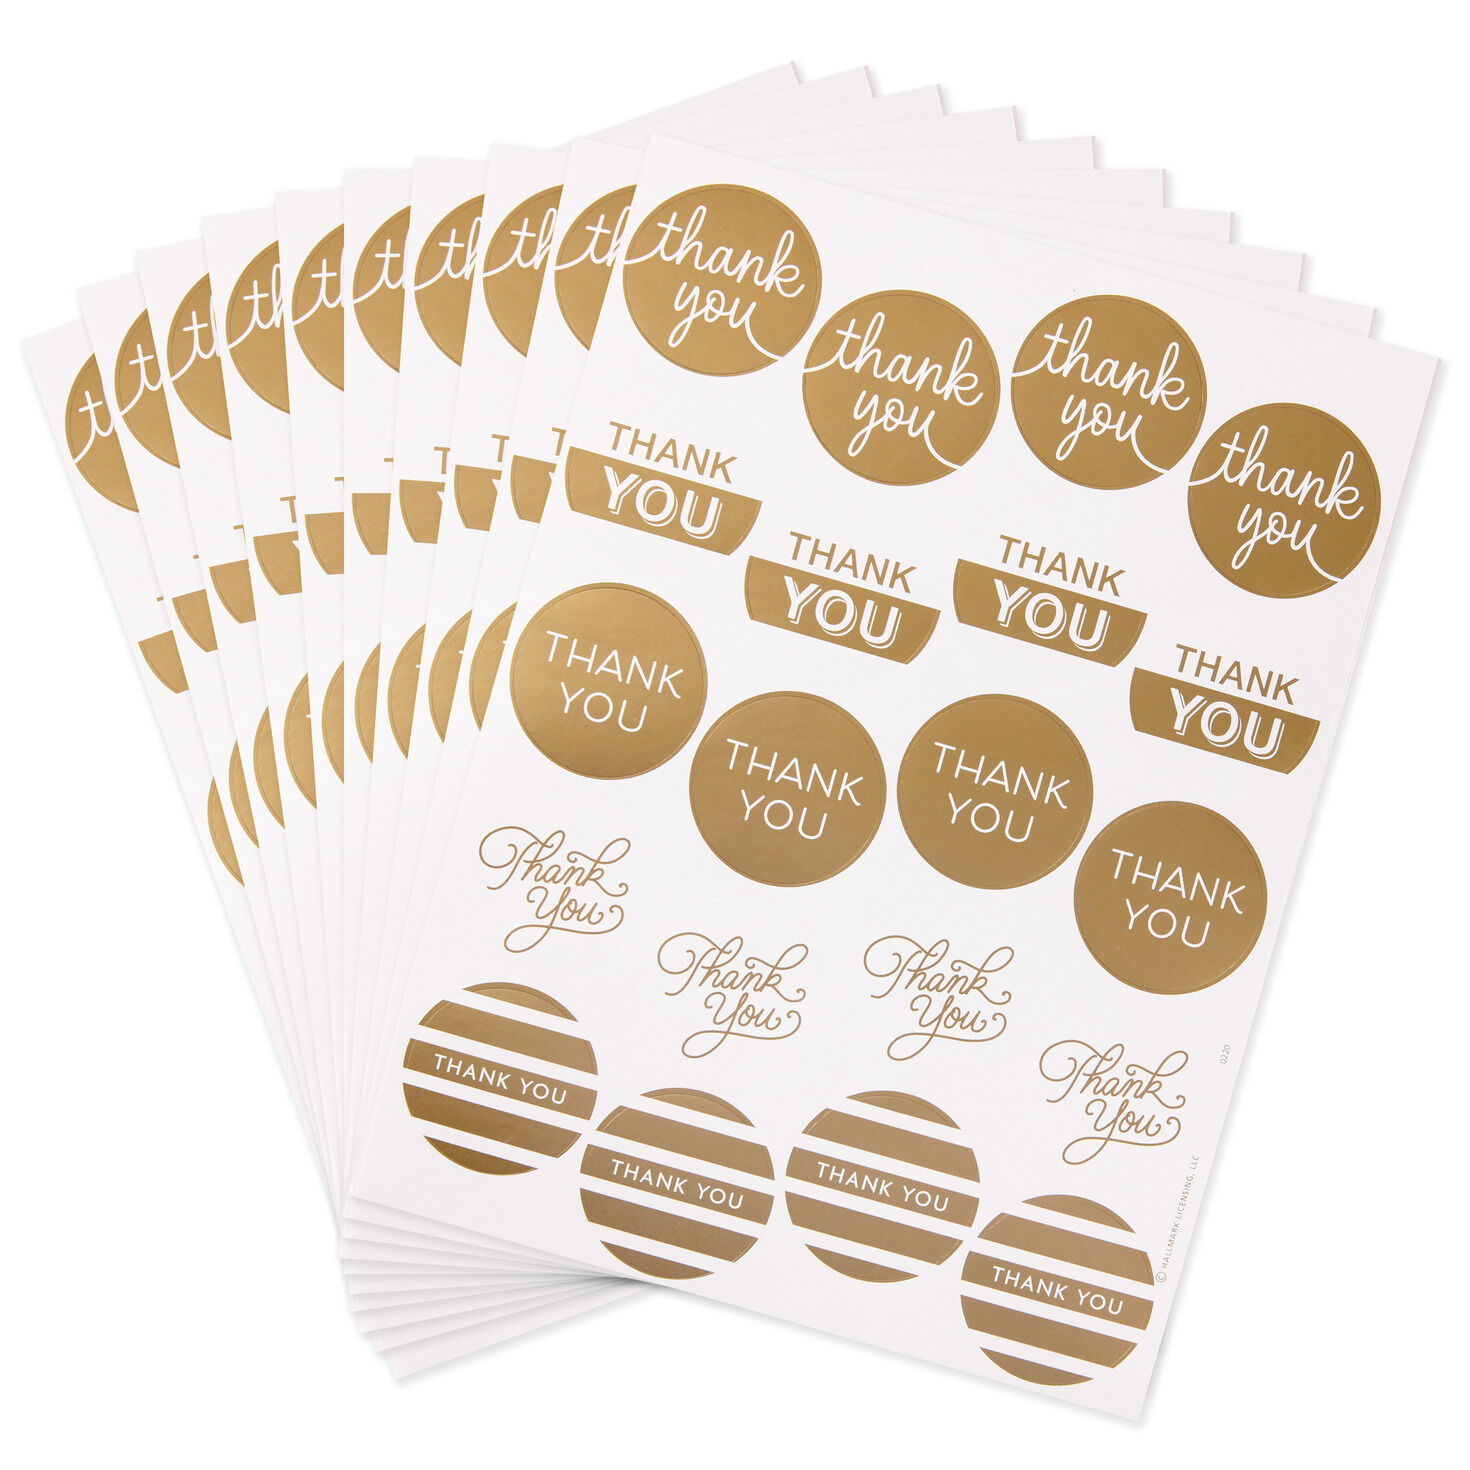 Star Christmas Envelope Seals - Set of 72, Gold Angel Christmas Sticker Seal